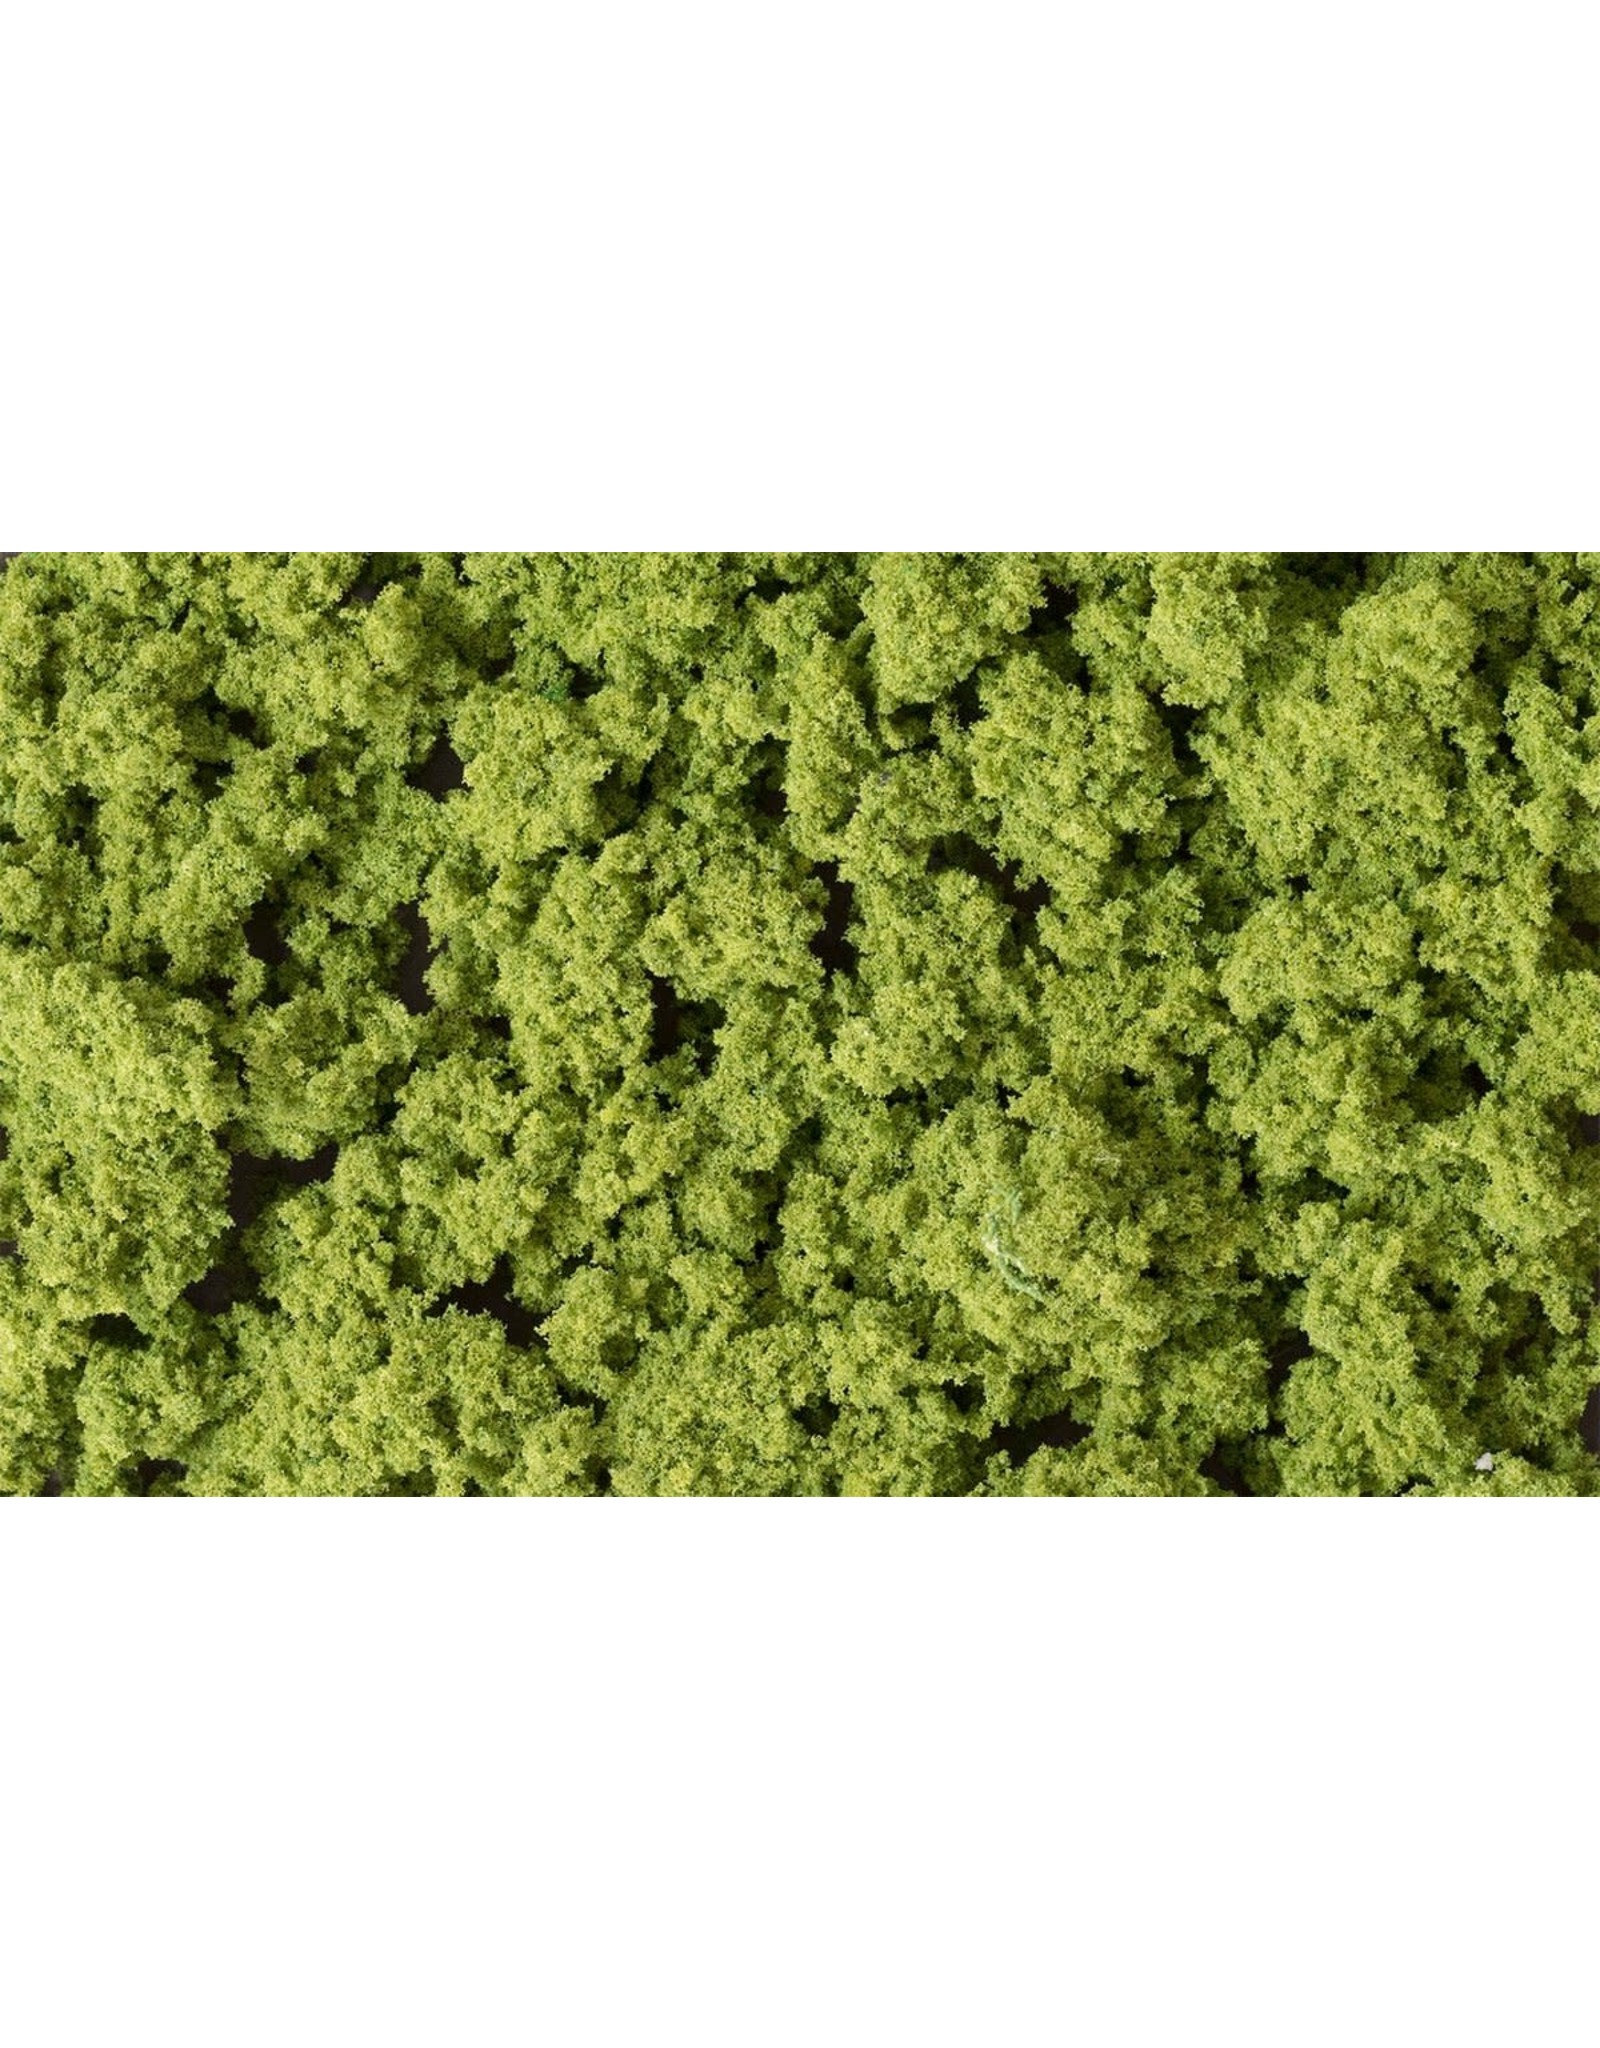 Woodland Scenics Clump Foliage(TM) - 3 Quarts 2.8L -- Light Green